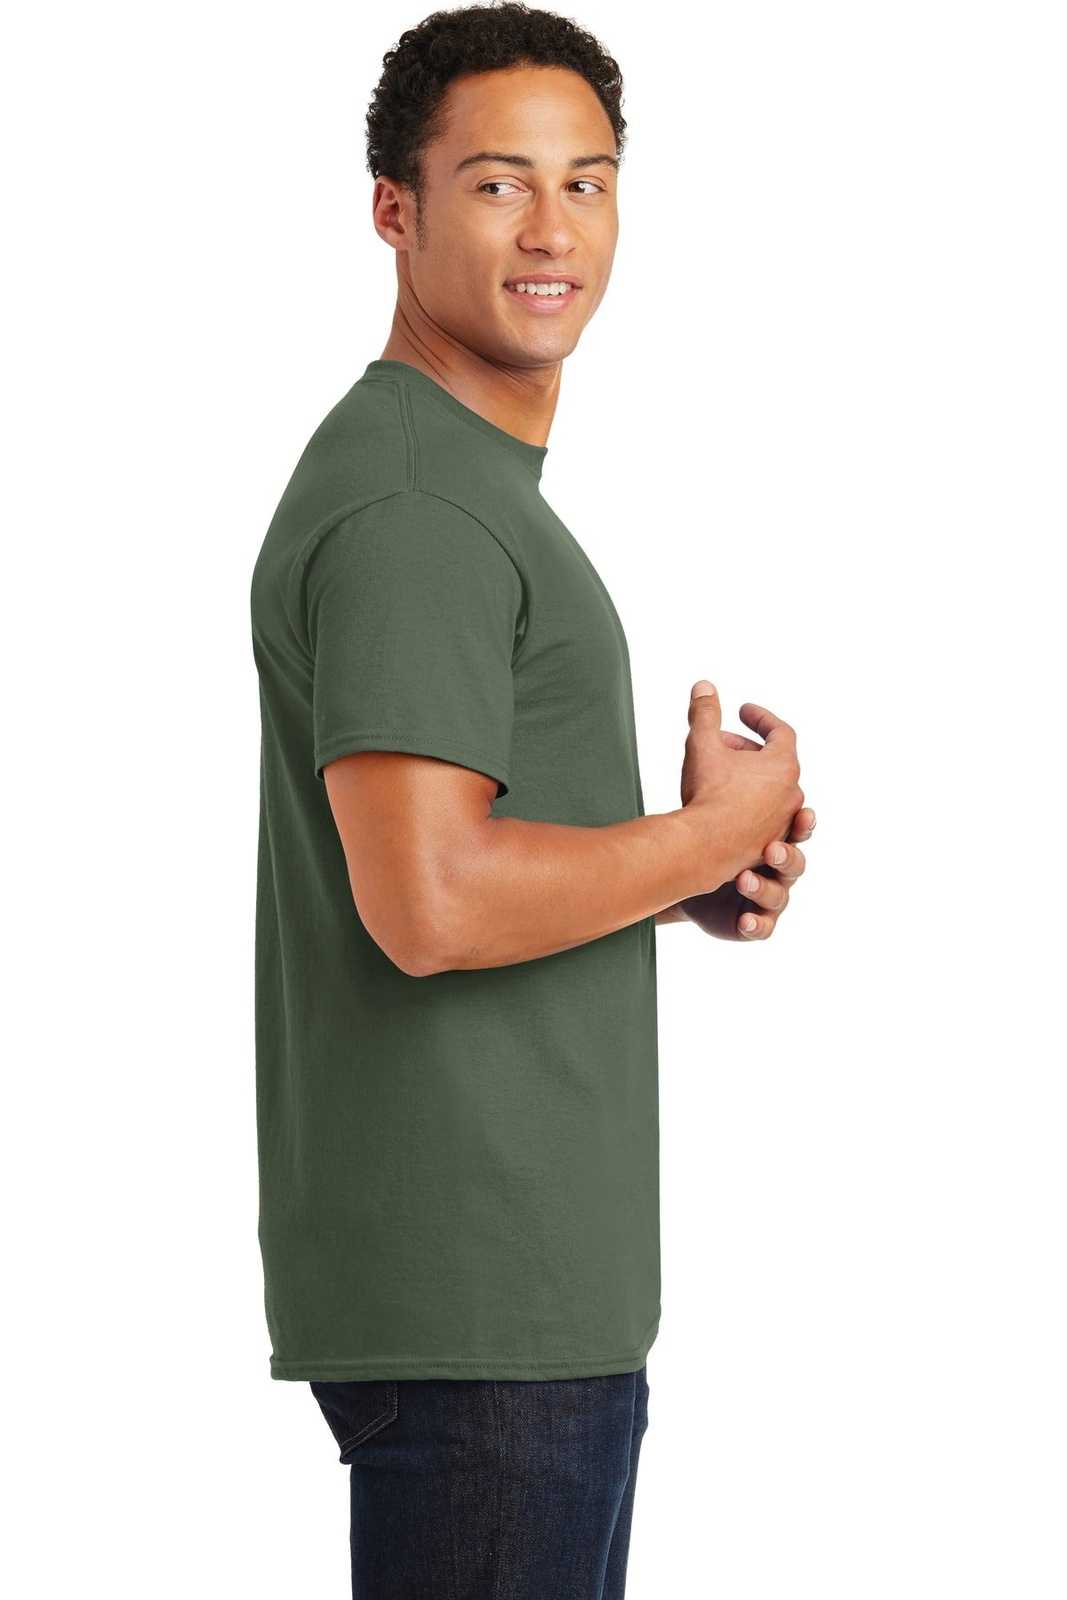 Gildan 2000 Ultra Cotton 100% Cotton T-Shirt - Military Green - HIT a Double